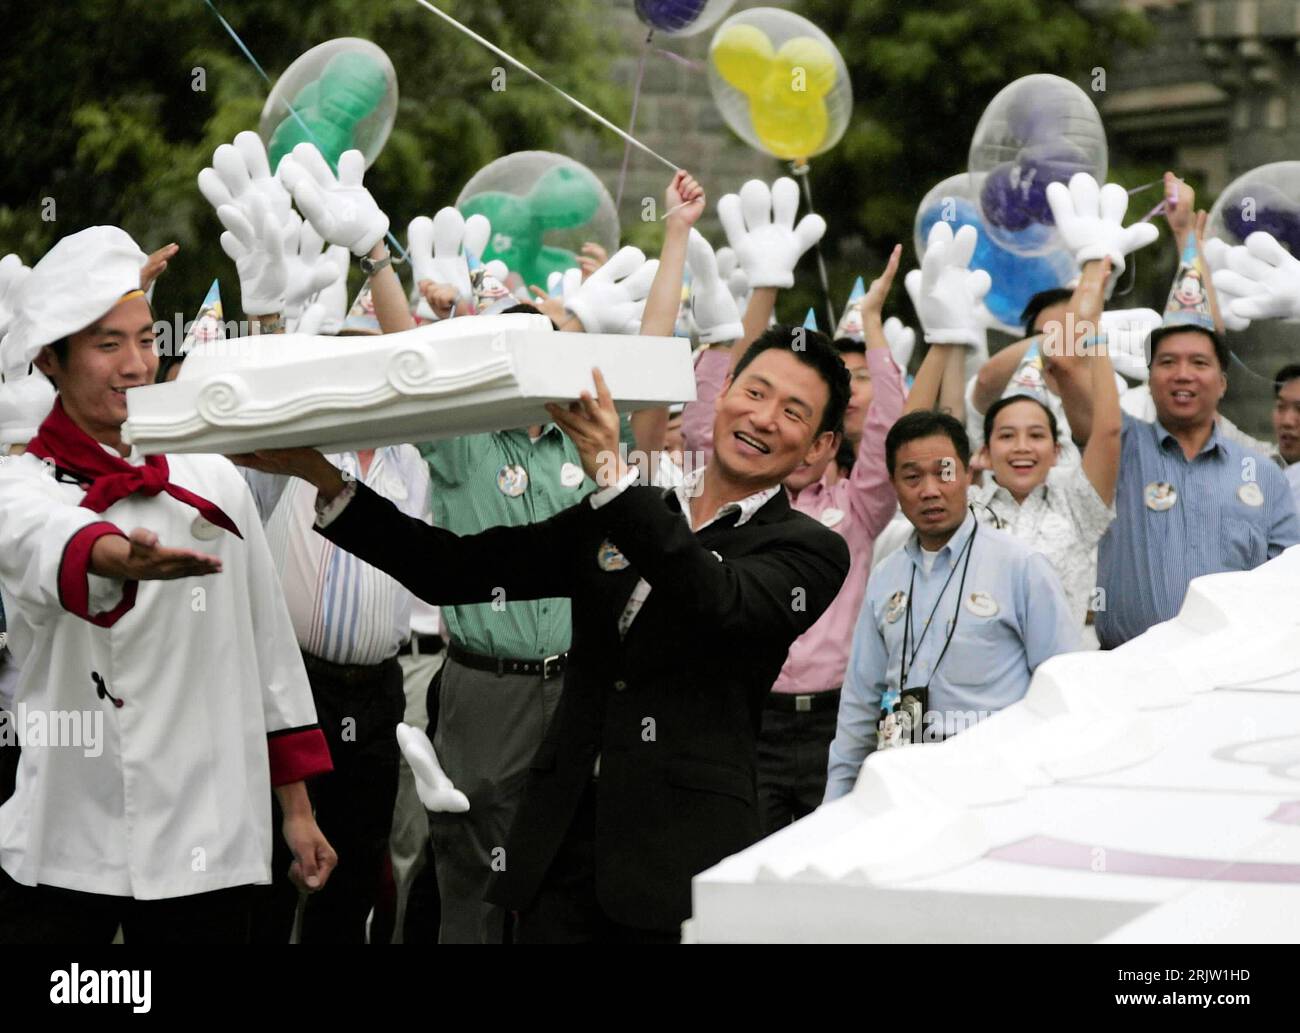 Bildnummer: 51814353  Datum: 12.09.2006  Copyright: imago/Xinhua Schauspieler Jacky Cheung (Mitte, CHN) mit einem Stück Geburtstagskuchen anlässlich des einjährigen Jubiläums von Disneyland in Hong Kong - PUBLICATIONxNOTxINxCHN, Personen , optimistisch , Freude; 2006, Hong Kong, Pressetermin, Jubiläumsveranstaltungen, Jahrestag, Jubiläum, Disney Resort, 1., einjähriges, Kuchen, Torte, Geburtstag, Geburtstagskuchen, Geburtstagstorte, lacht; , quer, Kbdig, Gruppenbild, , Film, Kunst, China, Randbild, People, Hongkong Stock Photo